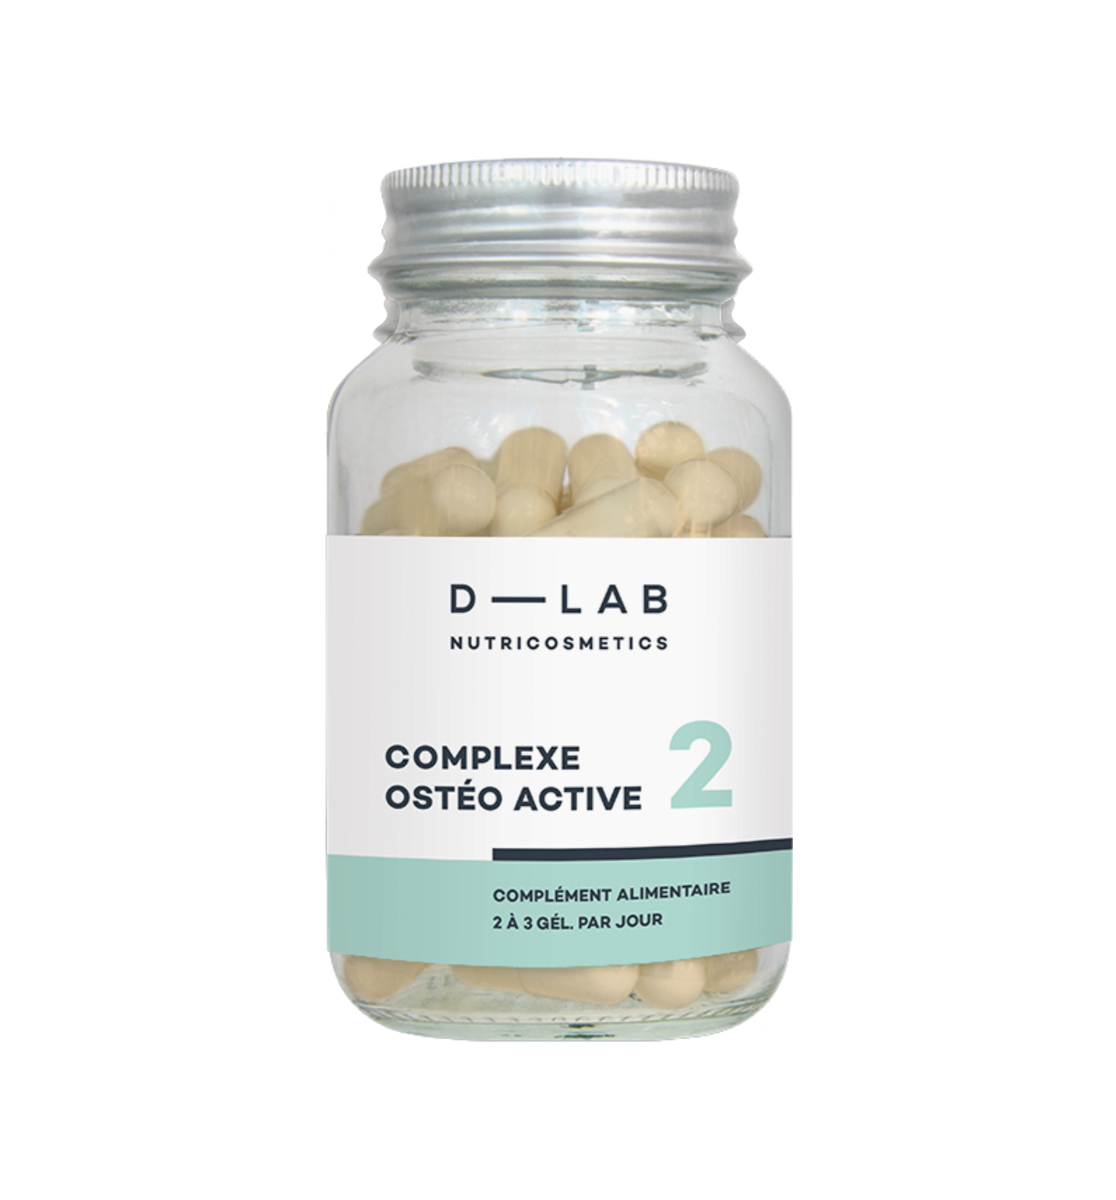 Complexe Coupe-Faim – D-LAB NUTRICOSMETICS